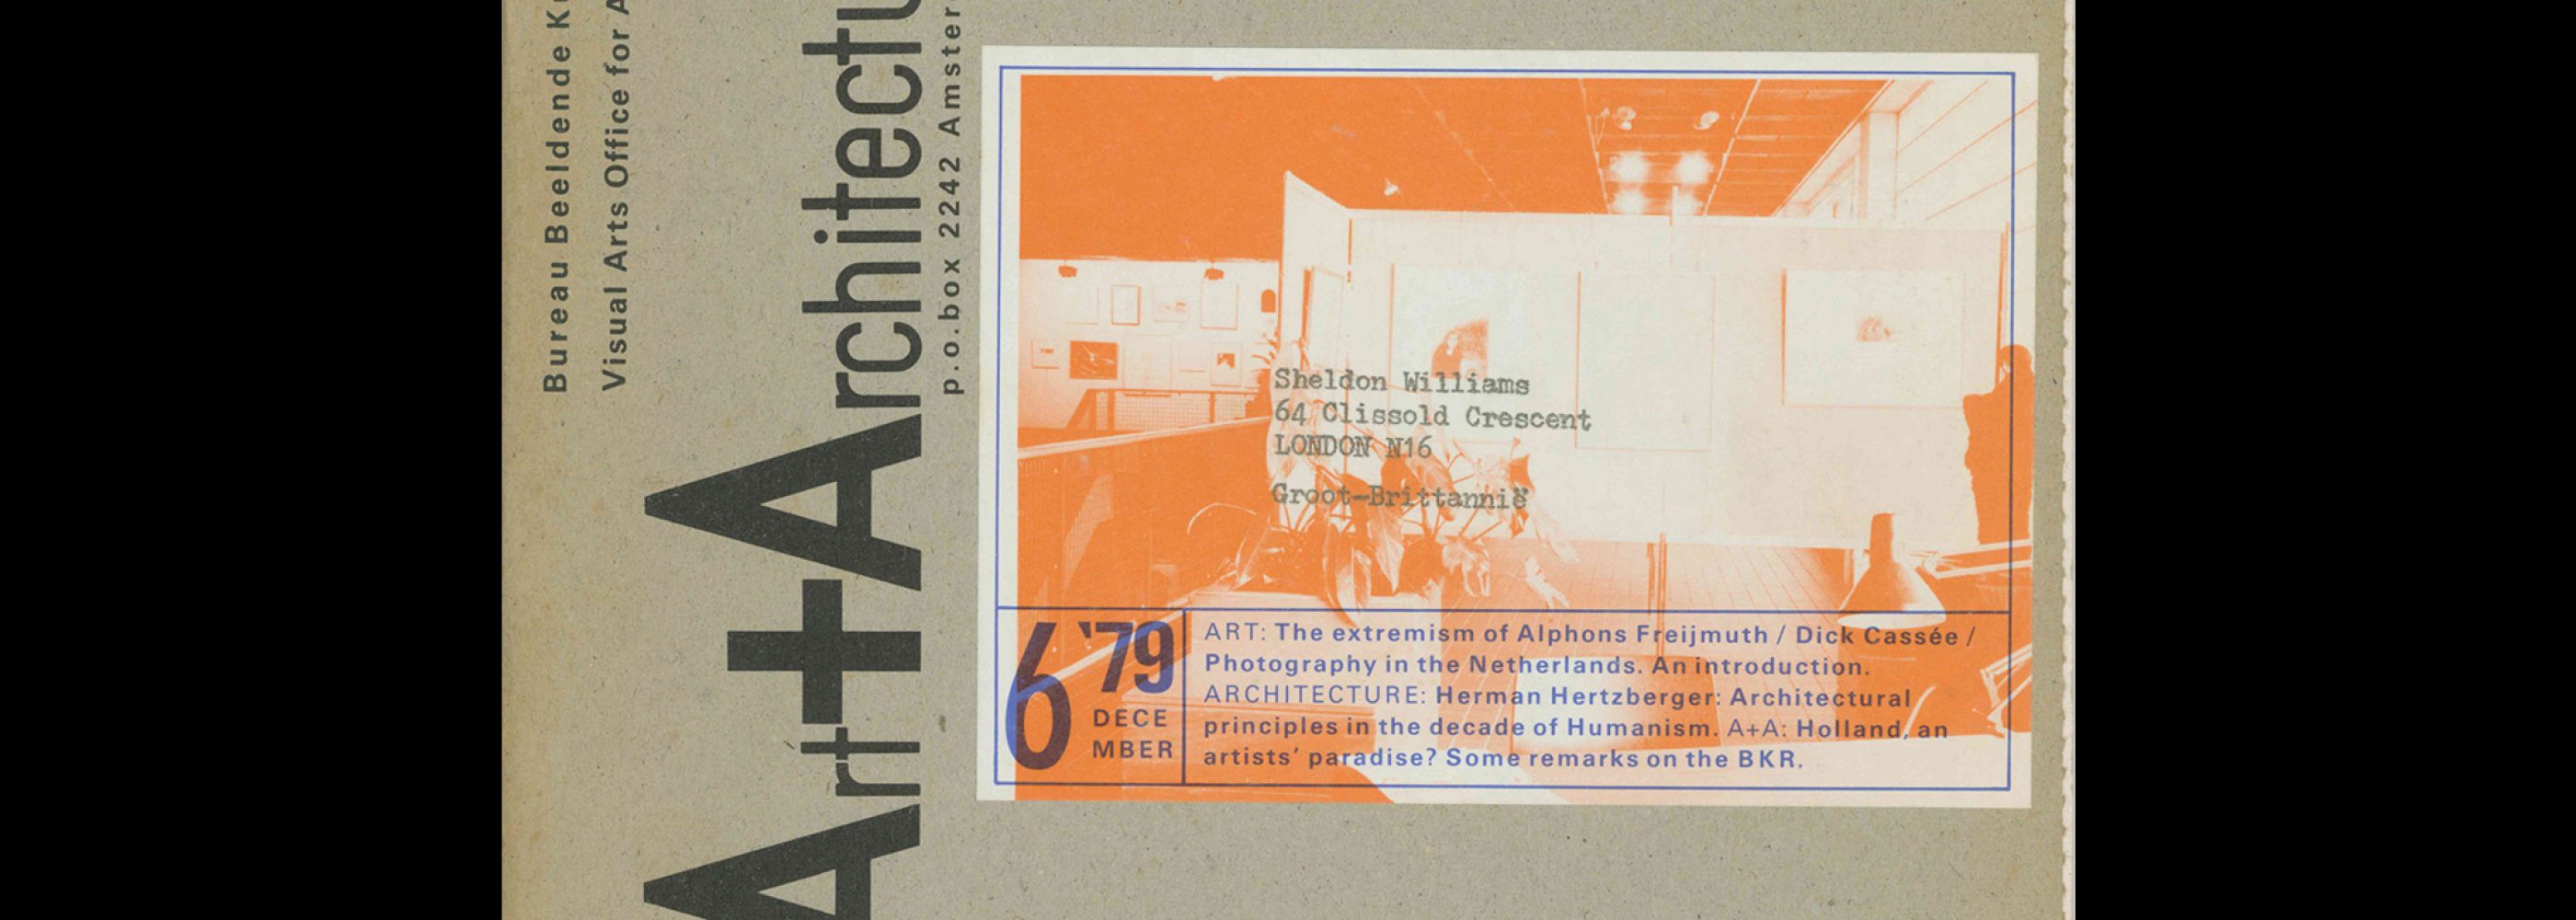 Dutch Art + Architecture Today 06, 1979. Designed by Jan van Toorn